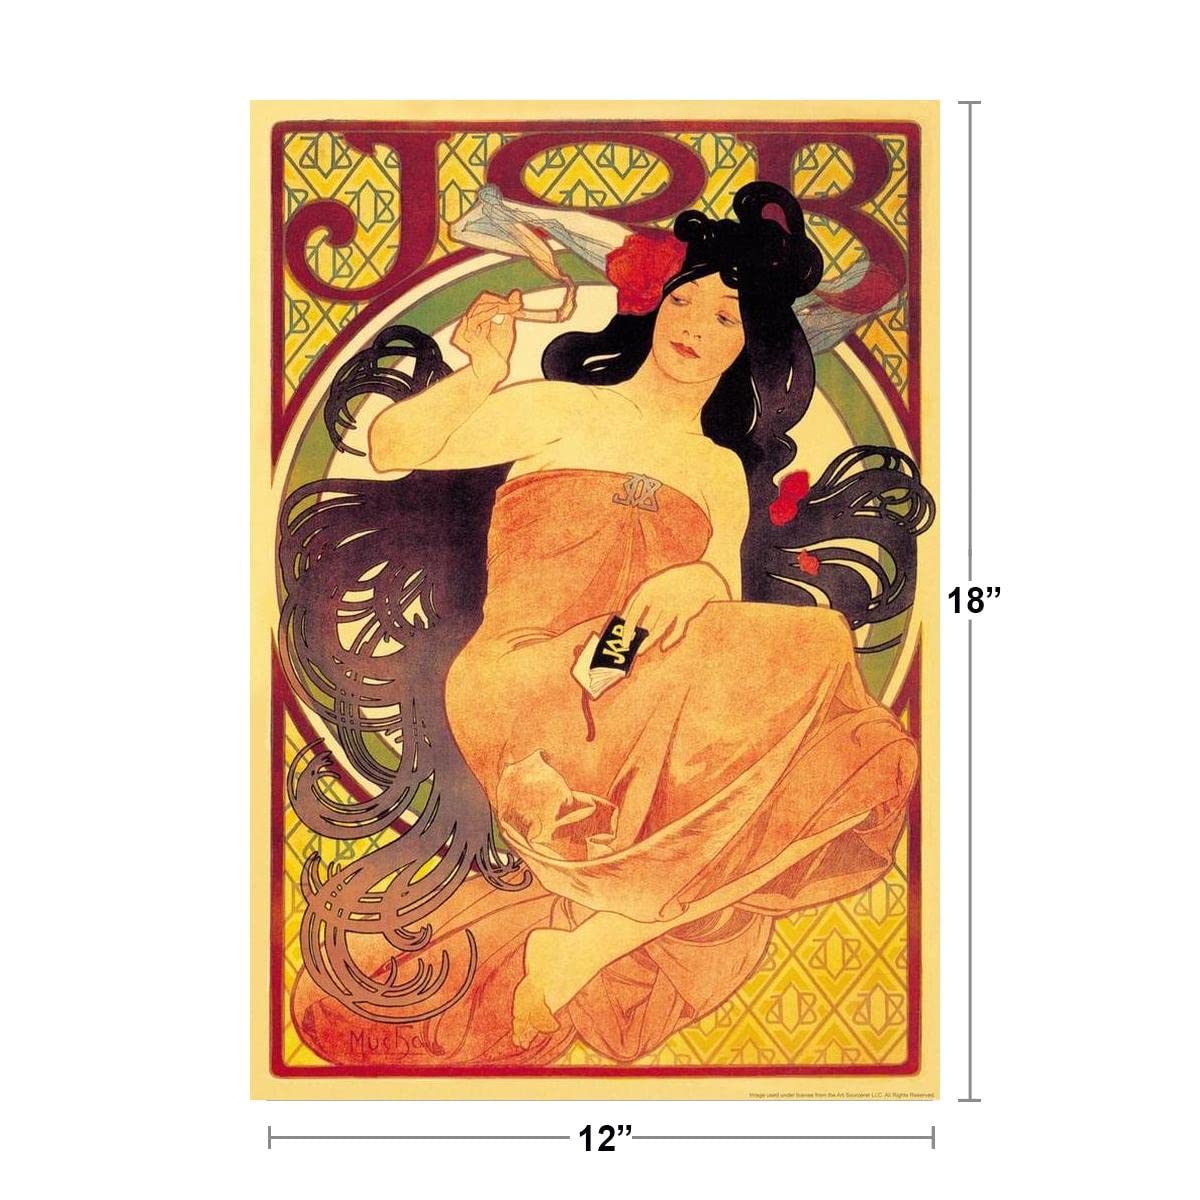 Job Cigarettes 1898 Alphonse Mucha Smoking Painting Poster Art Nouveau Vintage Ad Advertisement Cool Wall Decor Art Print Poster 12x18